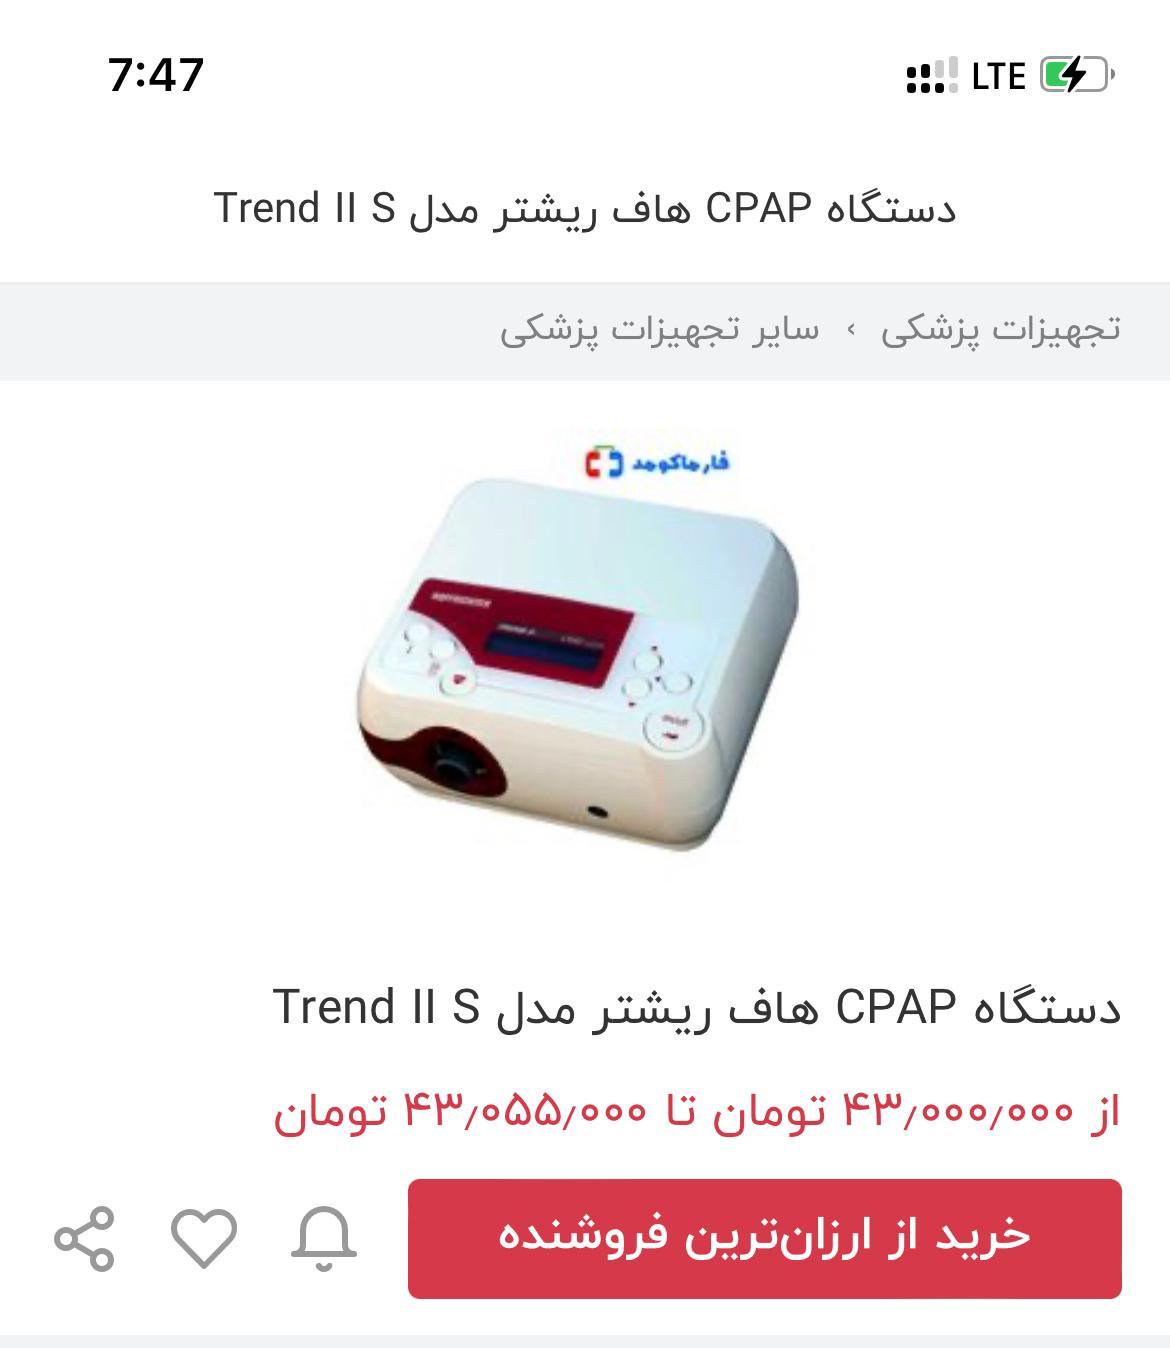 دستگاه CPAP هاف ریشتر مدل Trend II Sنو/مدینیوم